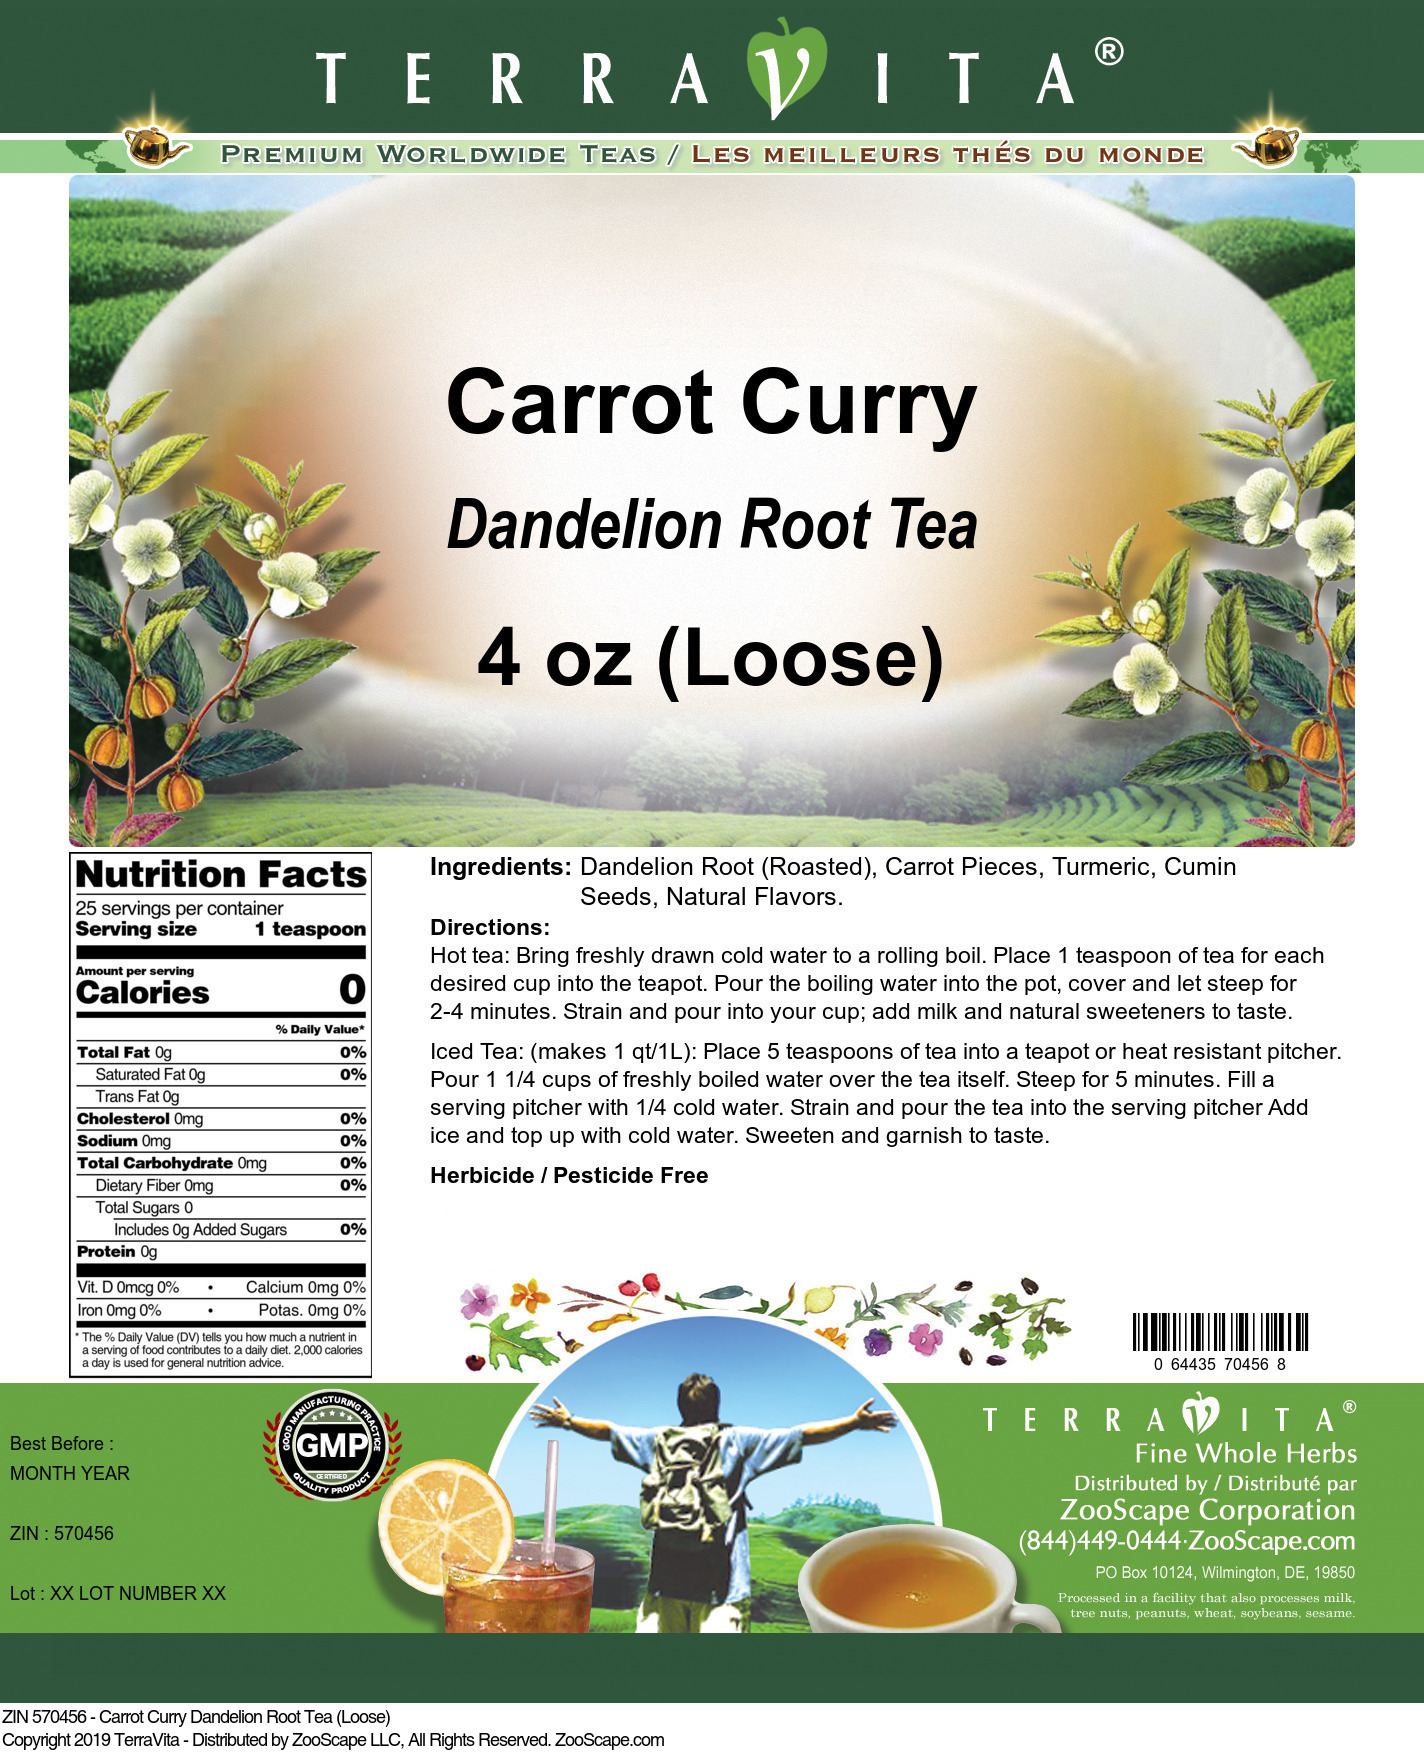 Carrot Curry Dandelion Root Tea (Loose) - Label